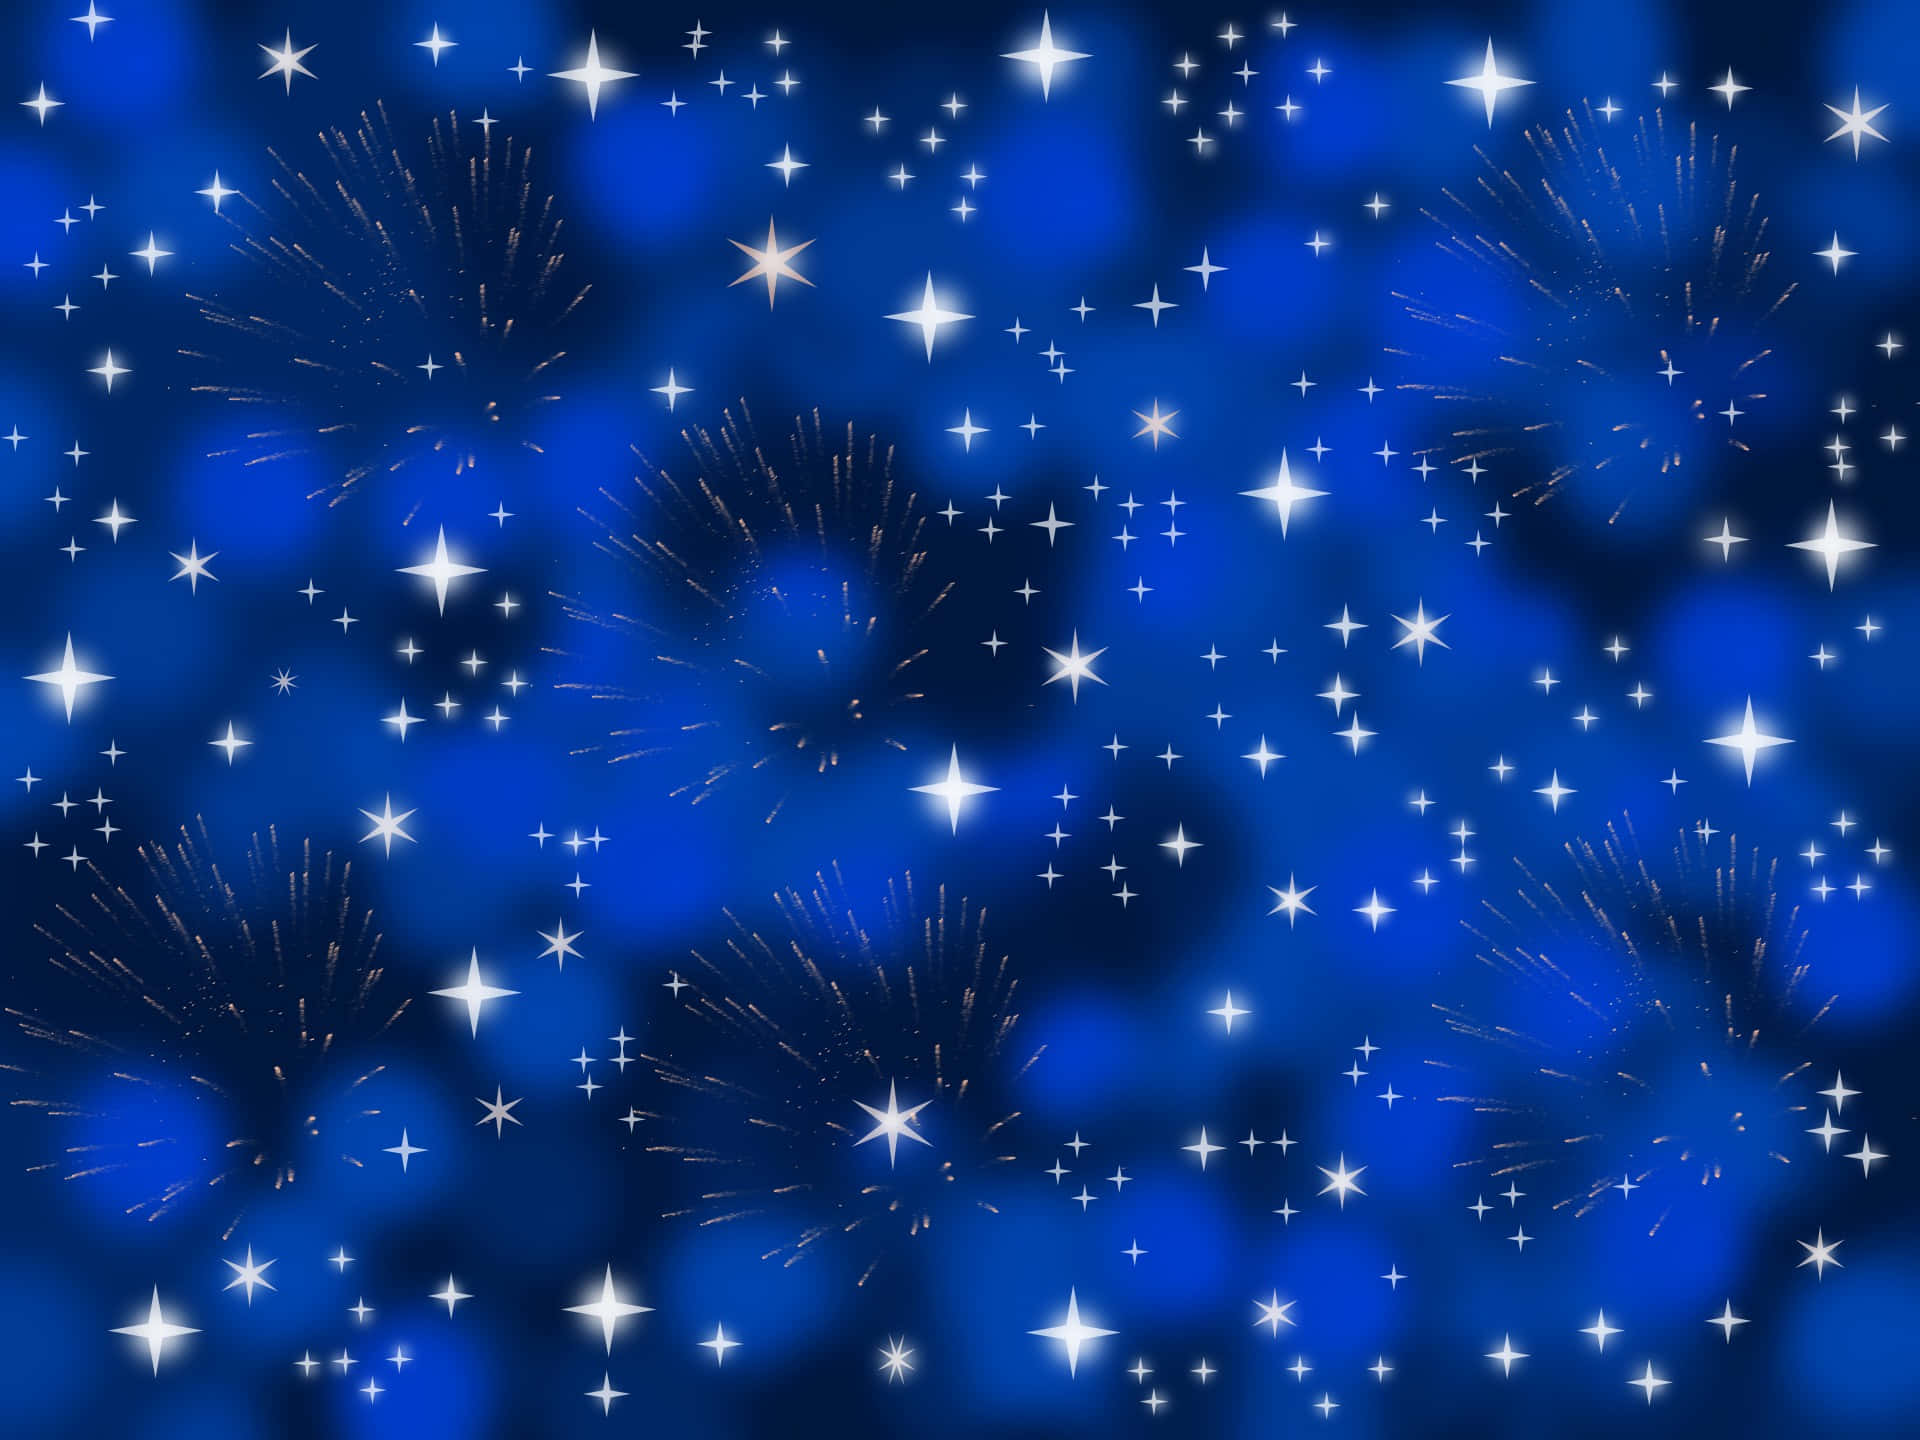 Vibrant Blue Stars in the Night Sky